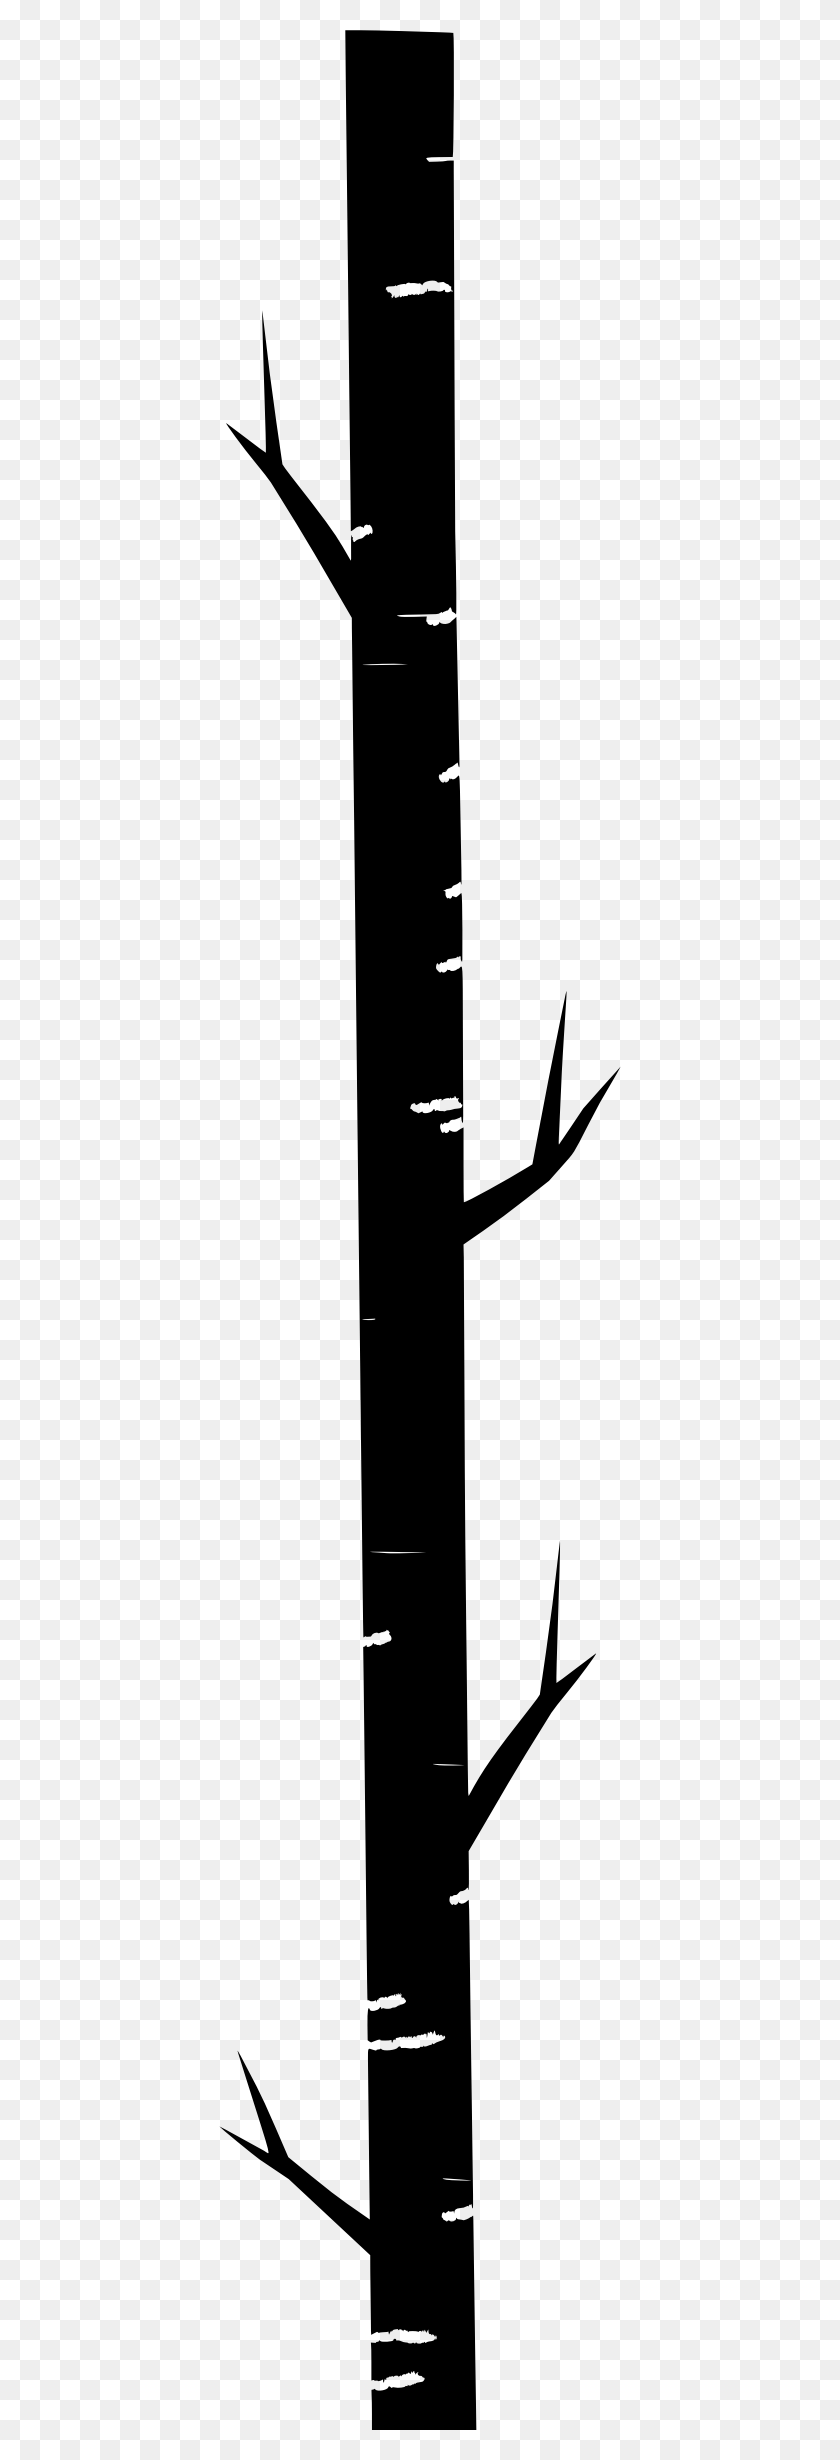 402x2400 Clipart - Clip Art Tree Trunk